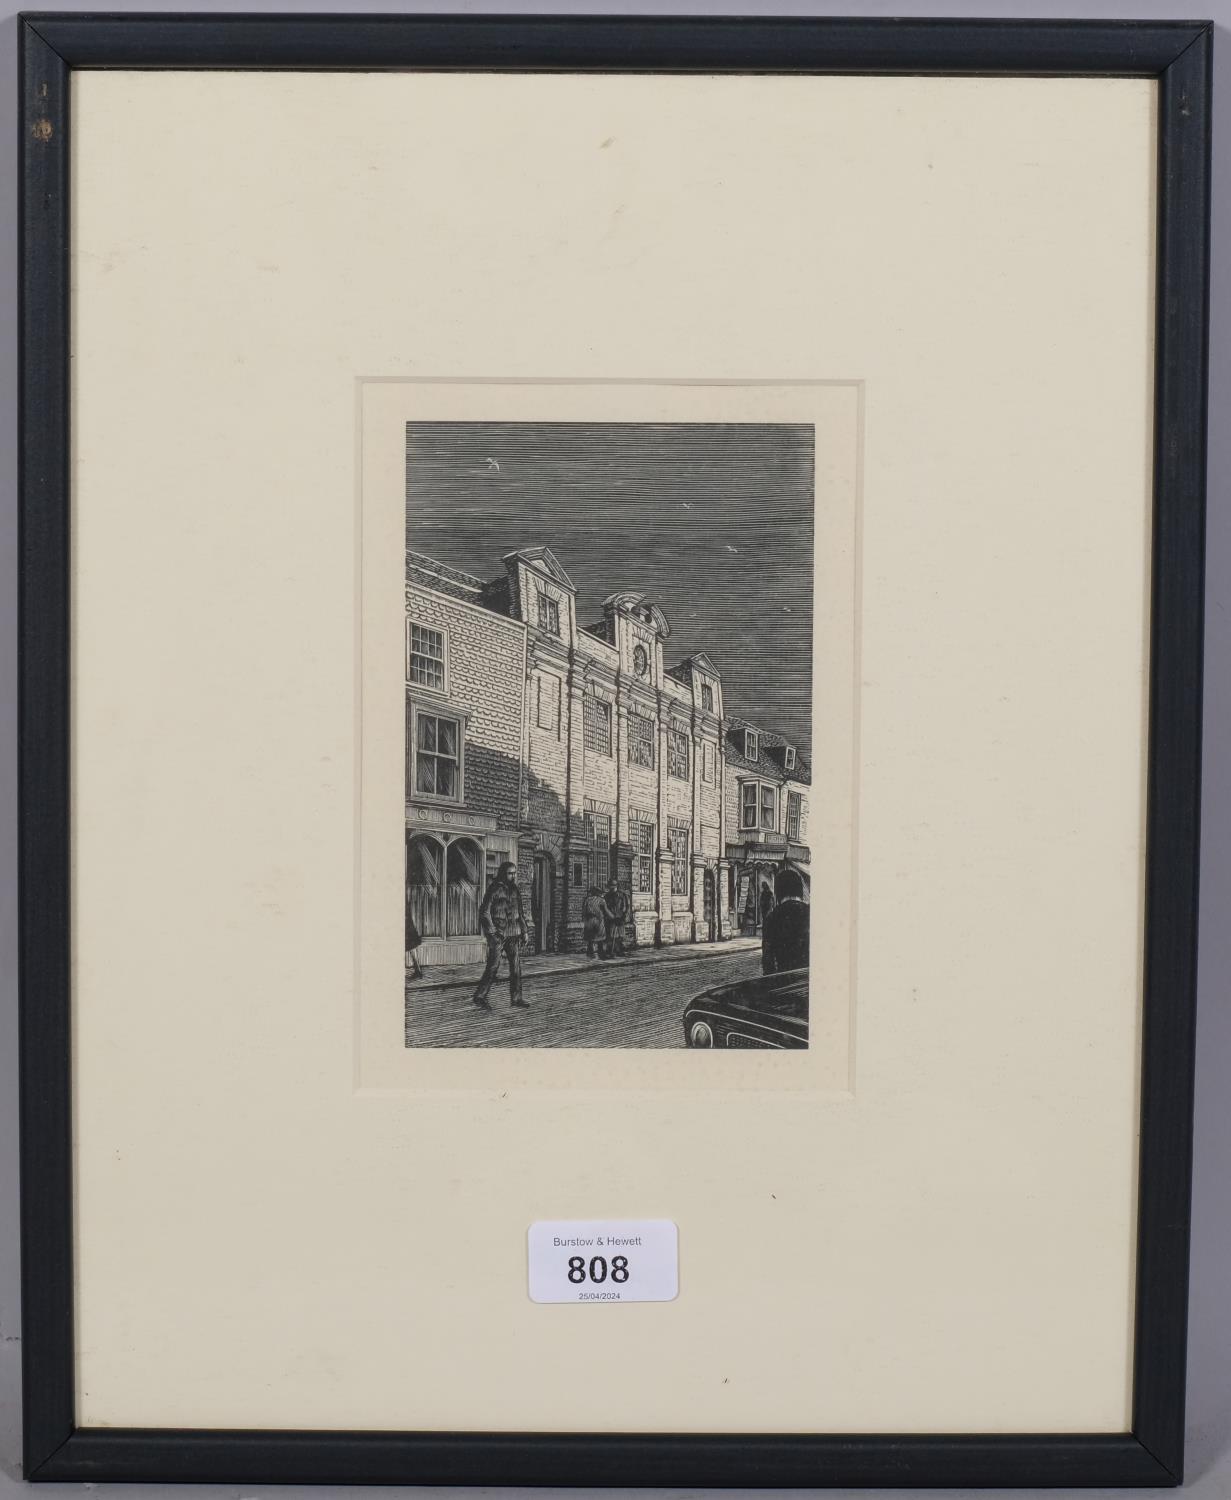 Michael Renton (1934 - 2000), Old Grammar School Rye, wood engraving, image 16cm x 10cm, framed Good - Image 2 of 4